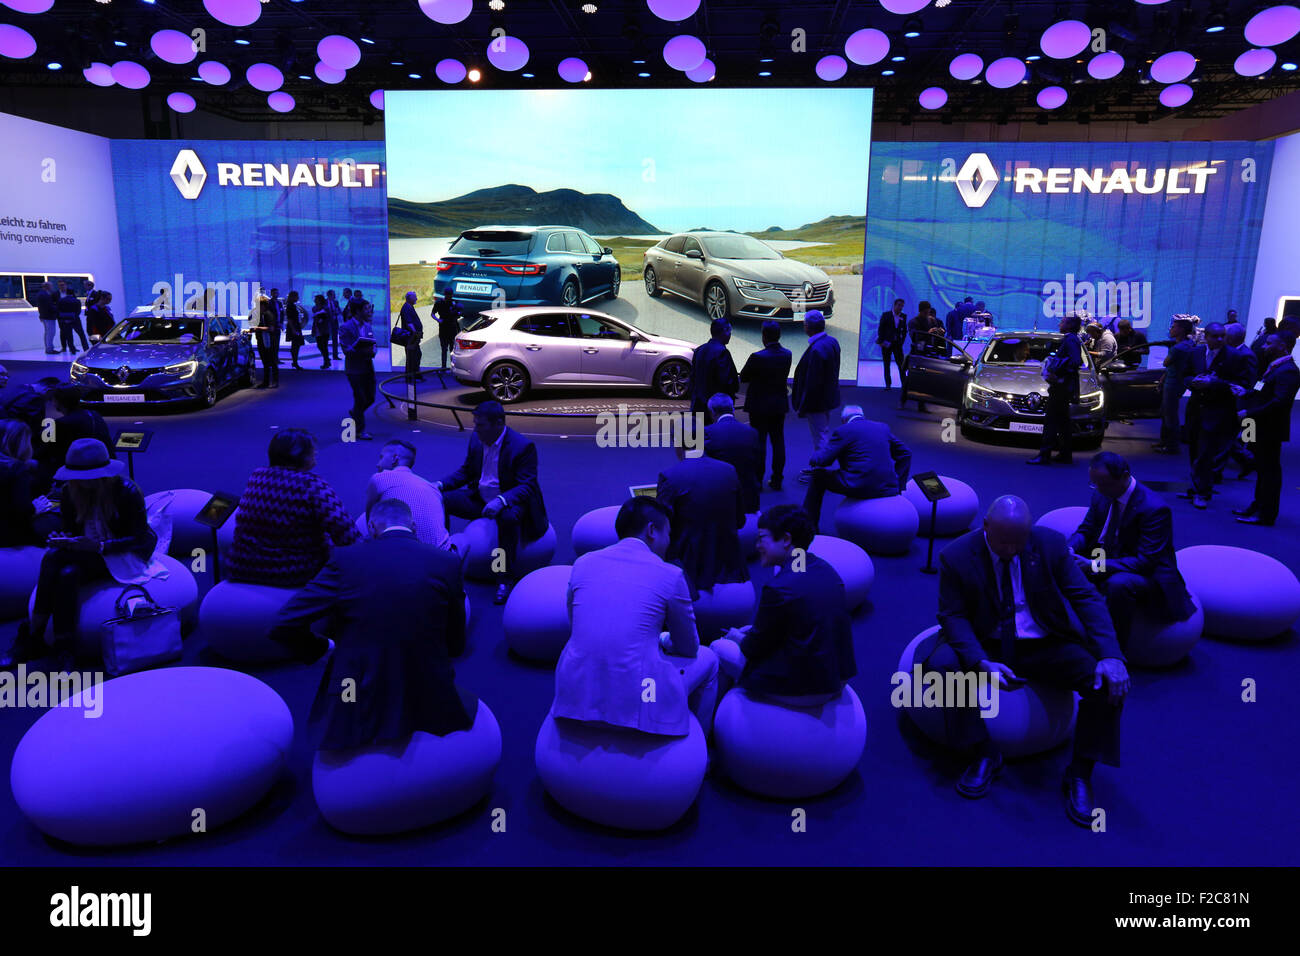 Frankfurt/M, 16.09.2015 - stand Renault en el 66º Salón Internacional del Automóvil IAA 2015 (Internationale Automobil Ausstellung IAA) en Frankfurt/Main, Alemania Foto de stock